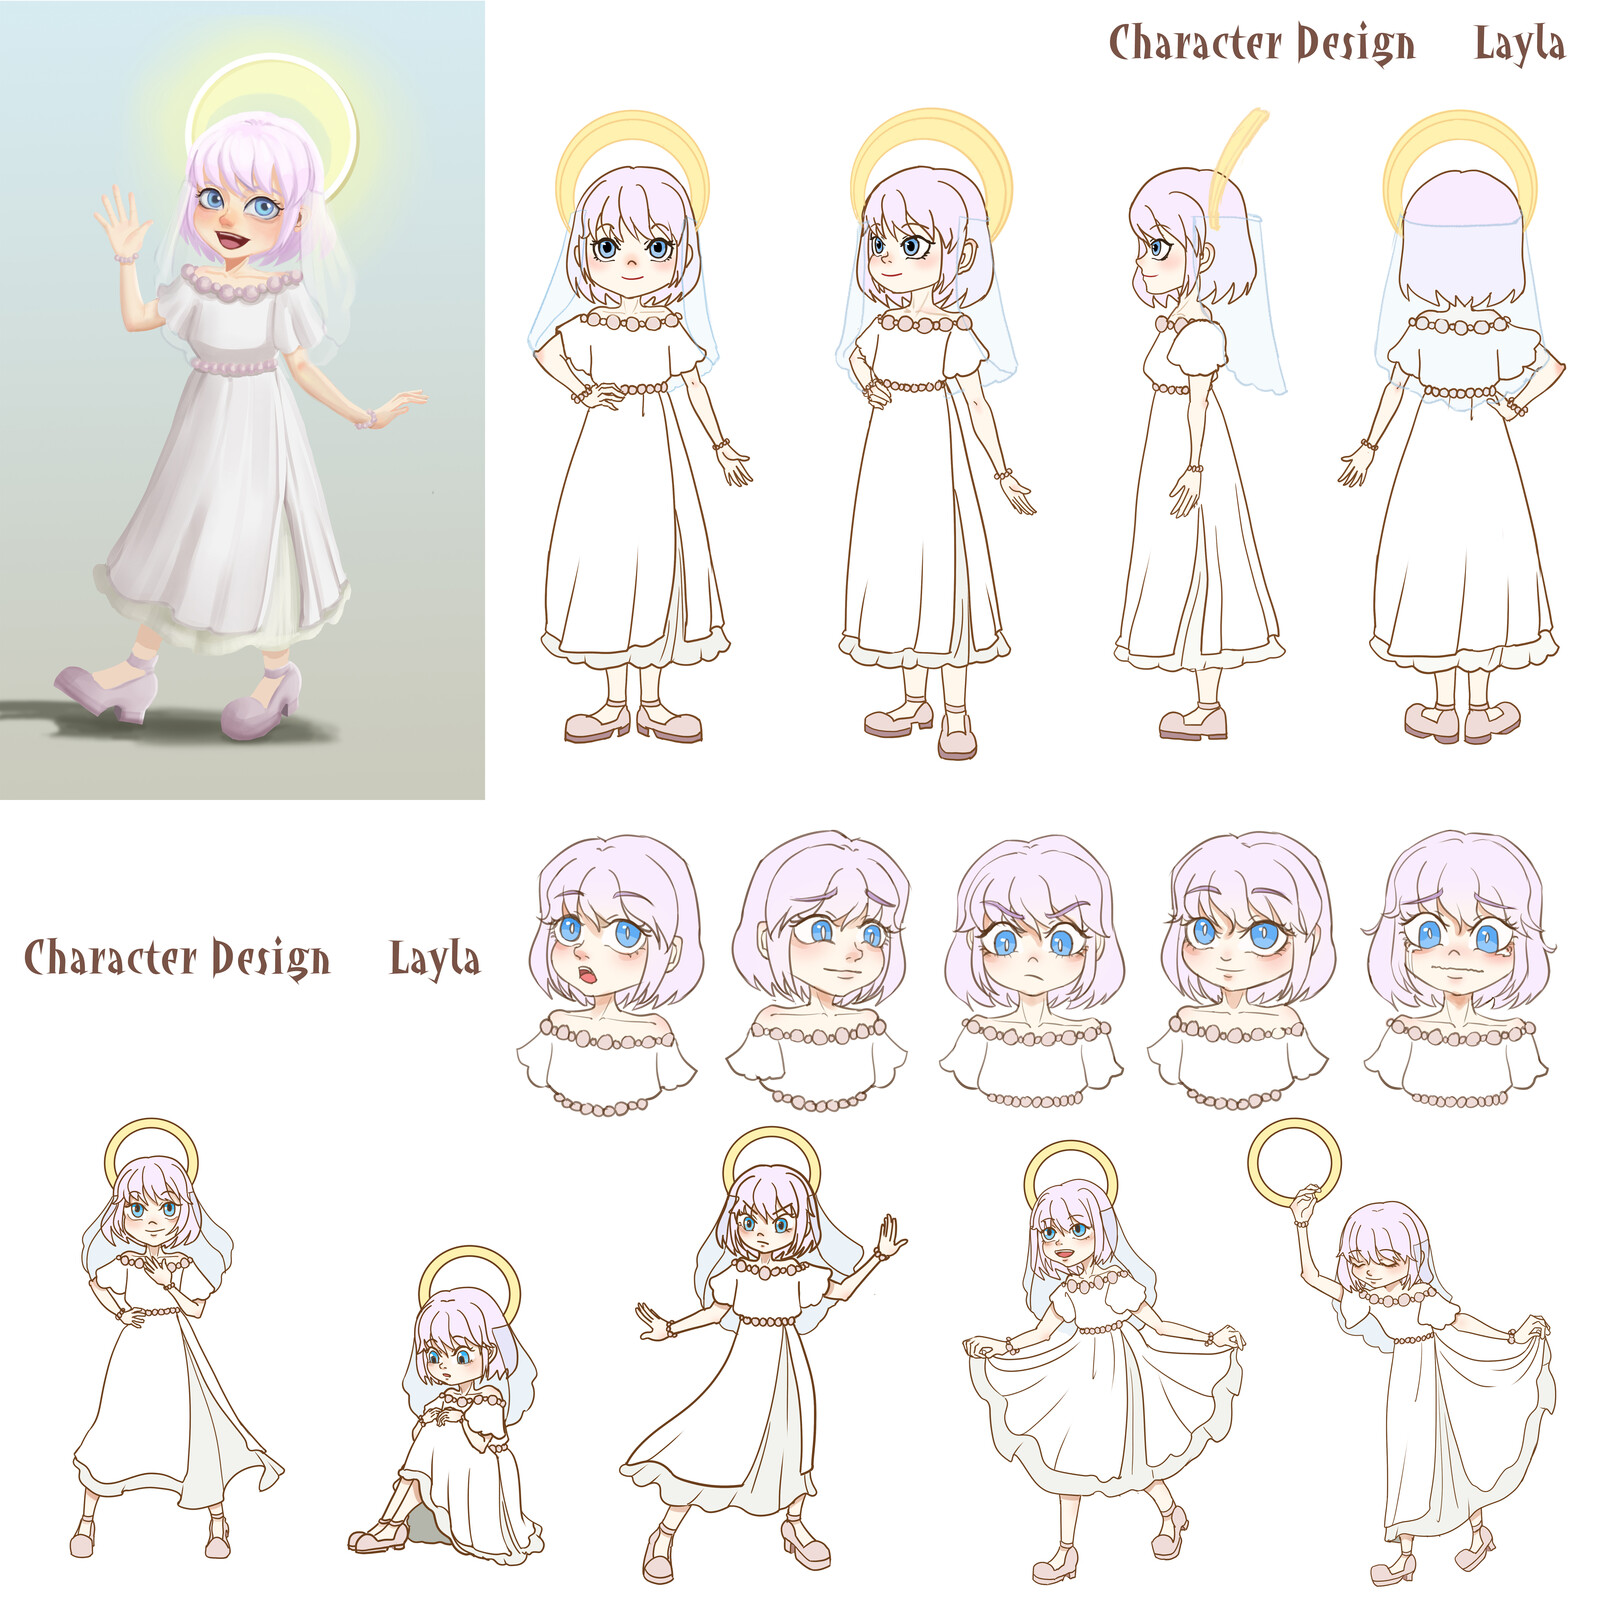 Character Design “Layla“---Layla